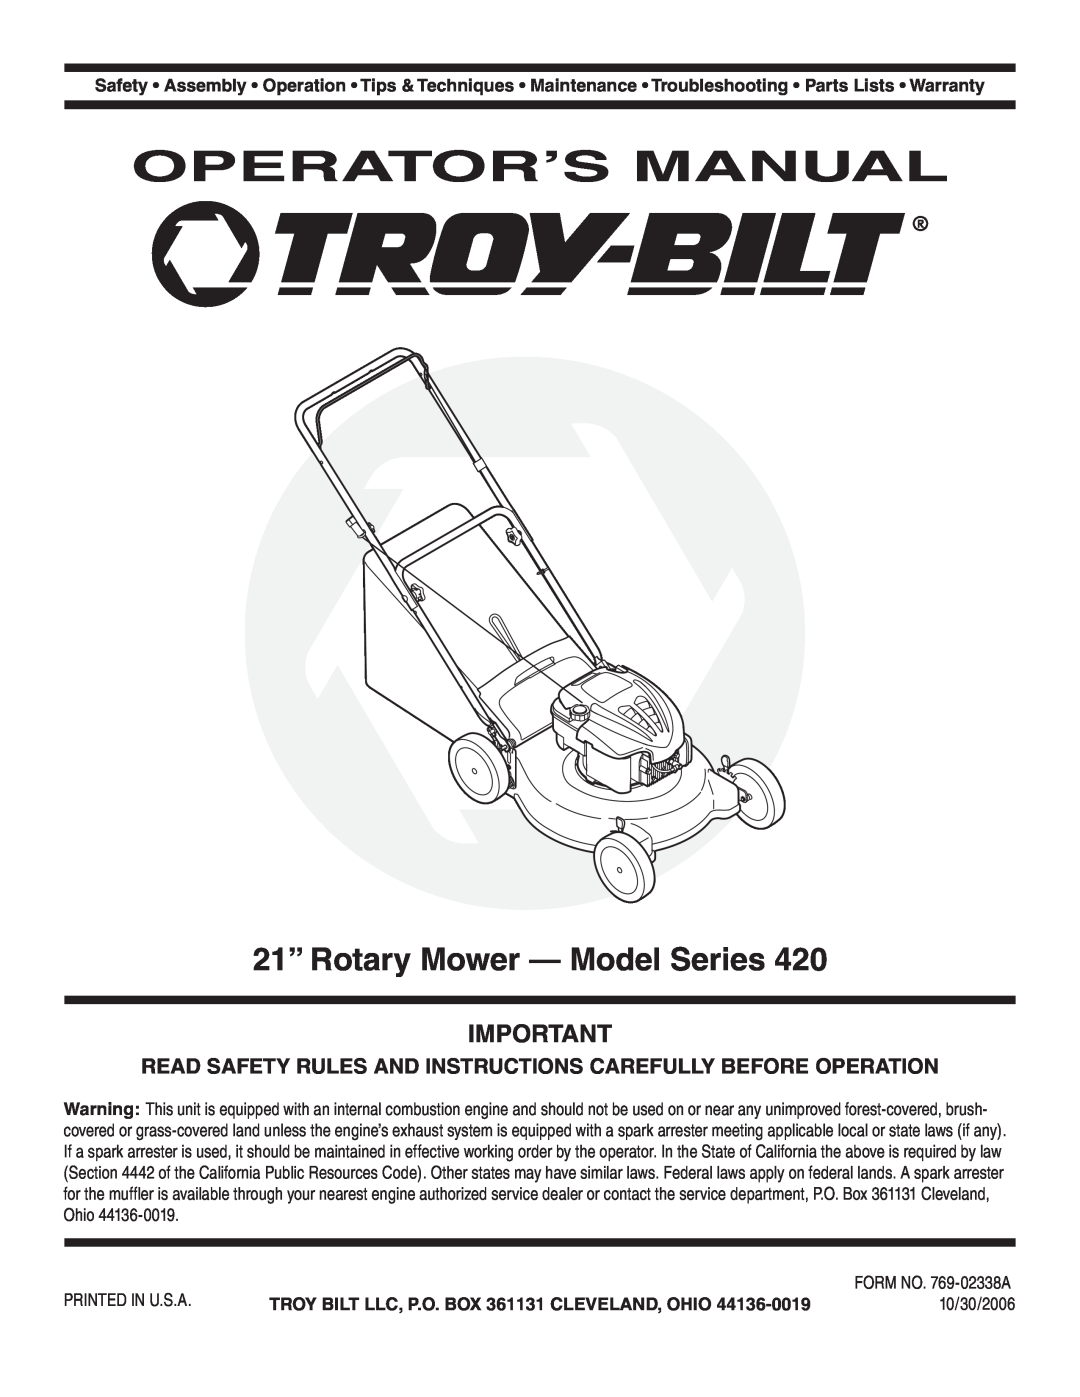 Troy-Bilt 420 warranty Operator’S Manual, 21” Rotary Mower - Model Series, TROY BILT LLC, P.O. BOX 361131 CLEVELAND, OHIO 